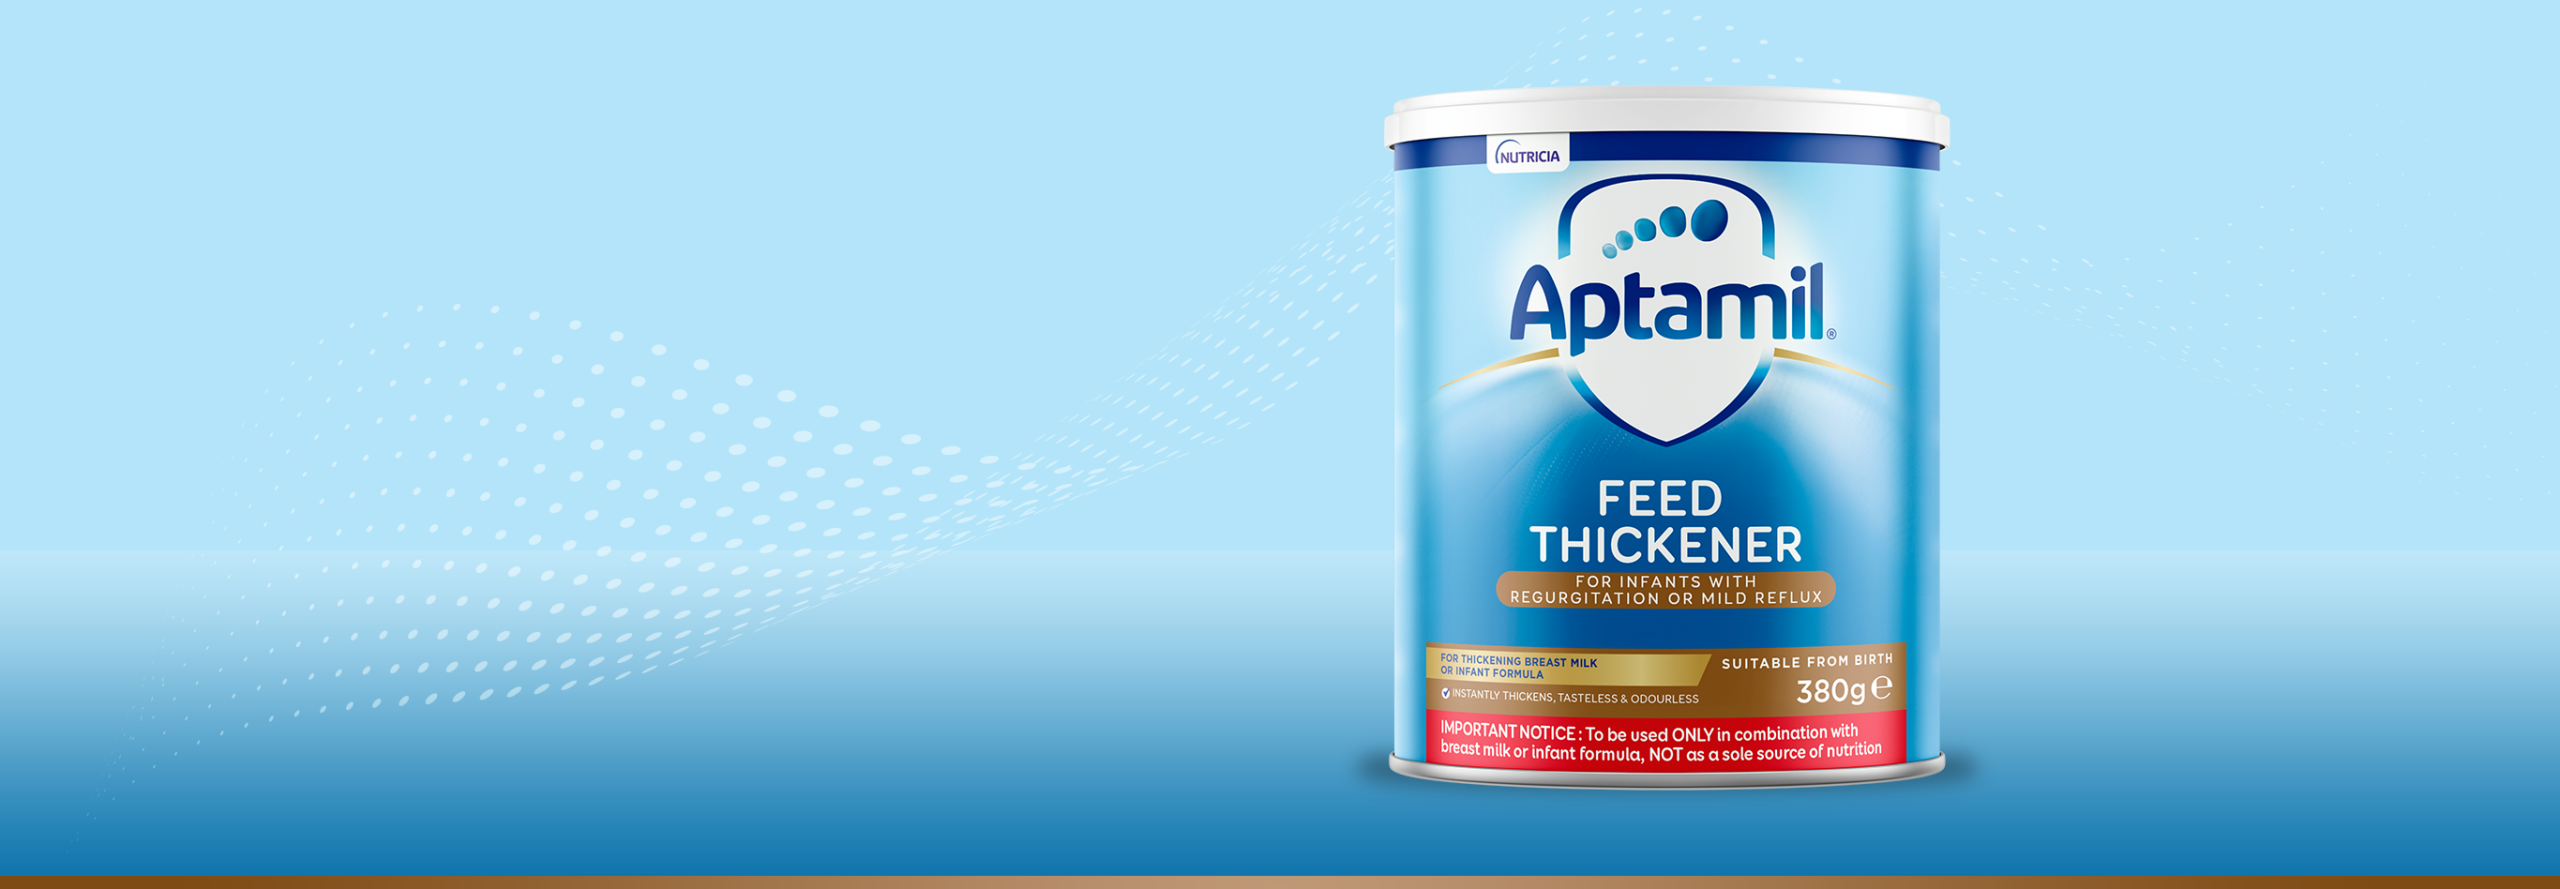 Aptamil Feed Thickener scoop size update